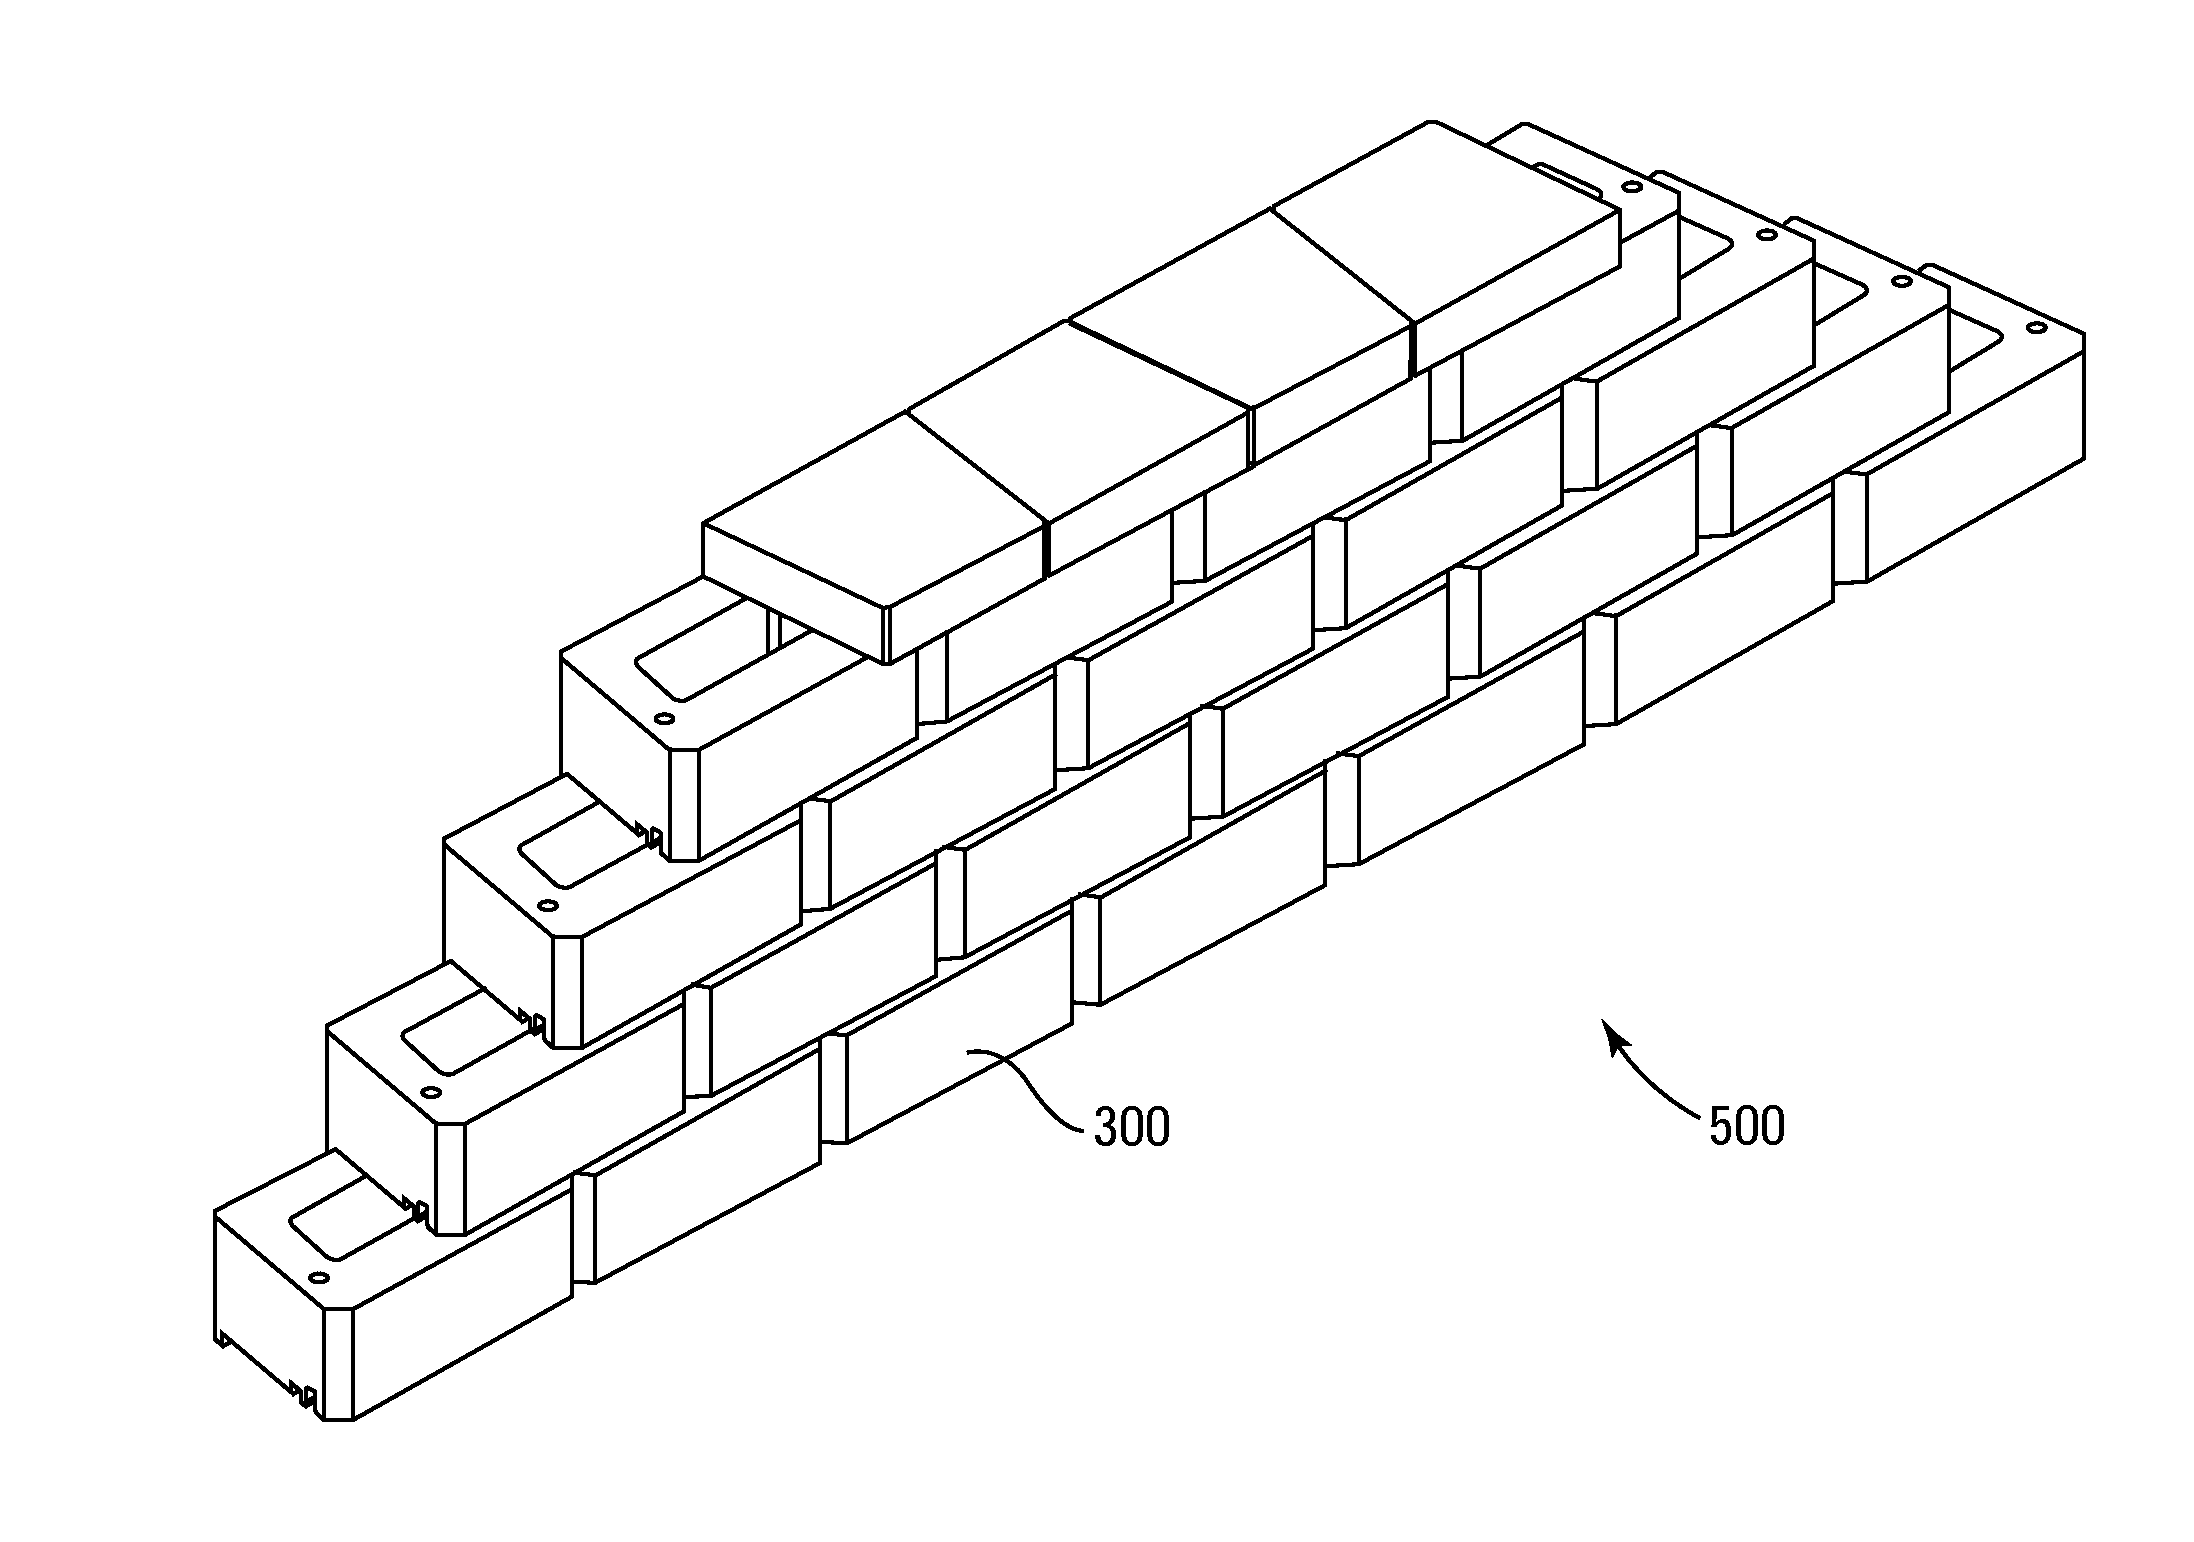 Retaining wall block system